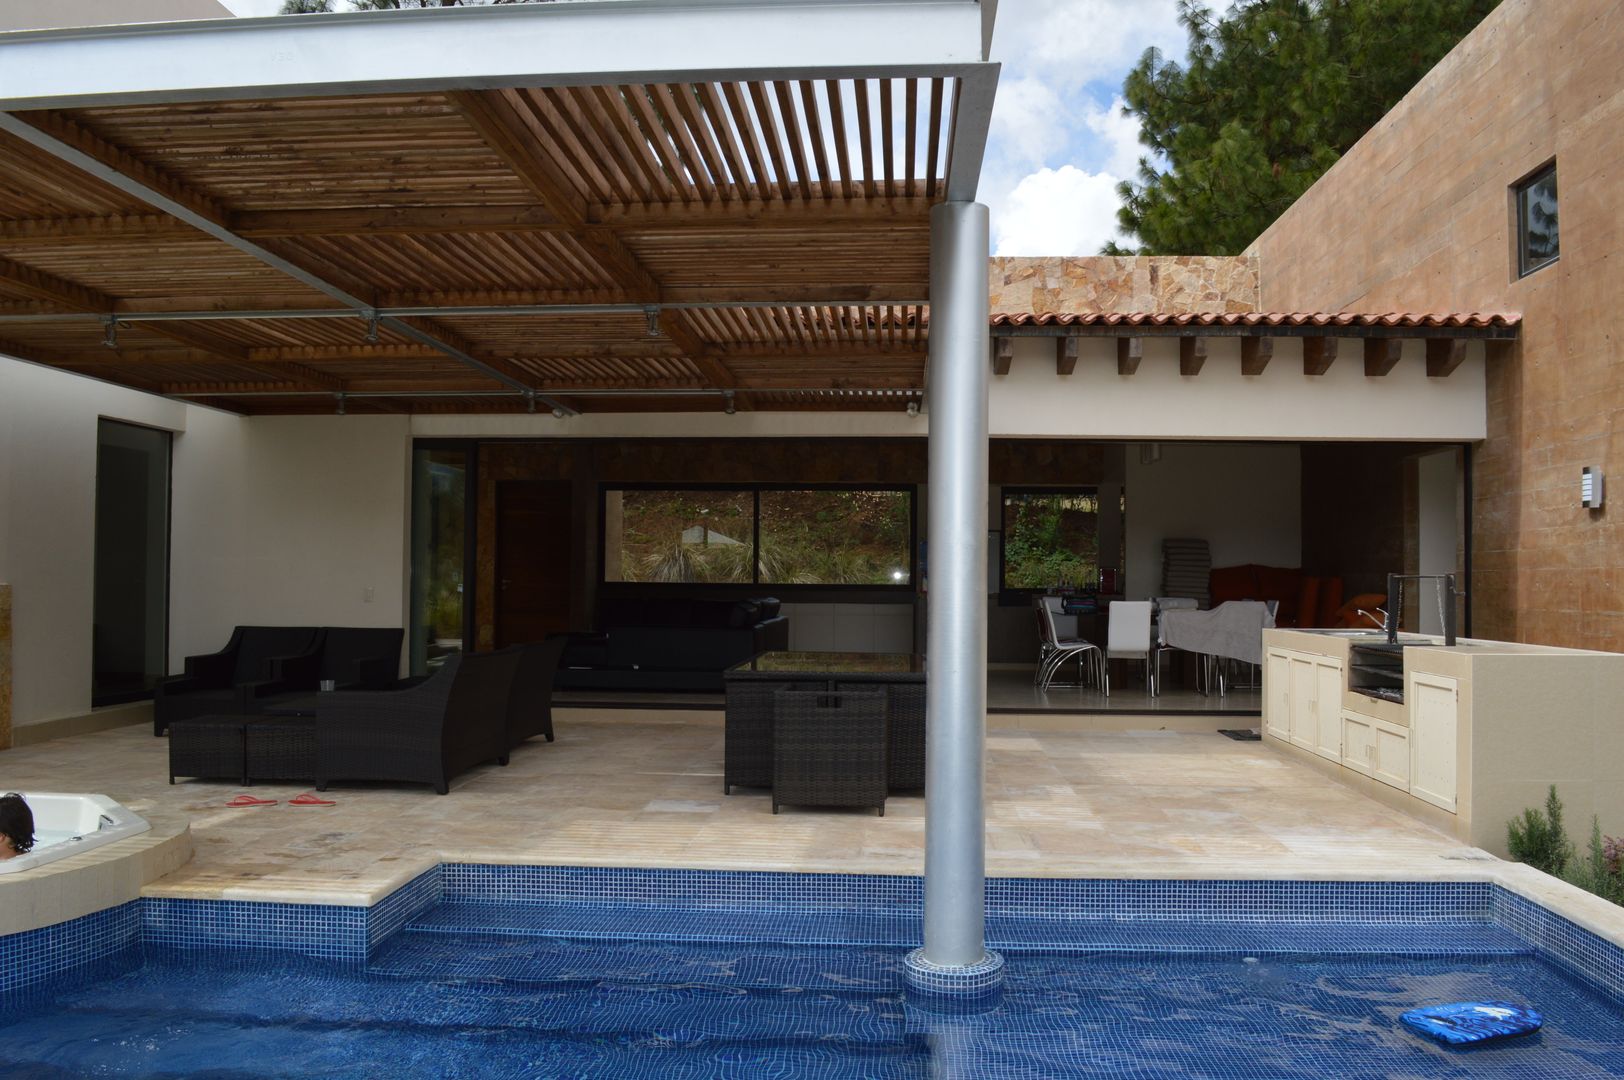 Detalle de columna metálica dentro de la piscina Revah Arqs Balcones y terrazas modernos